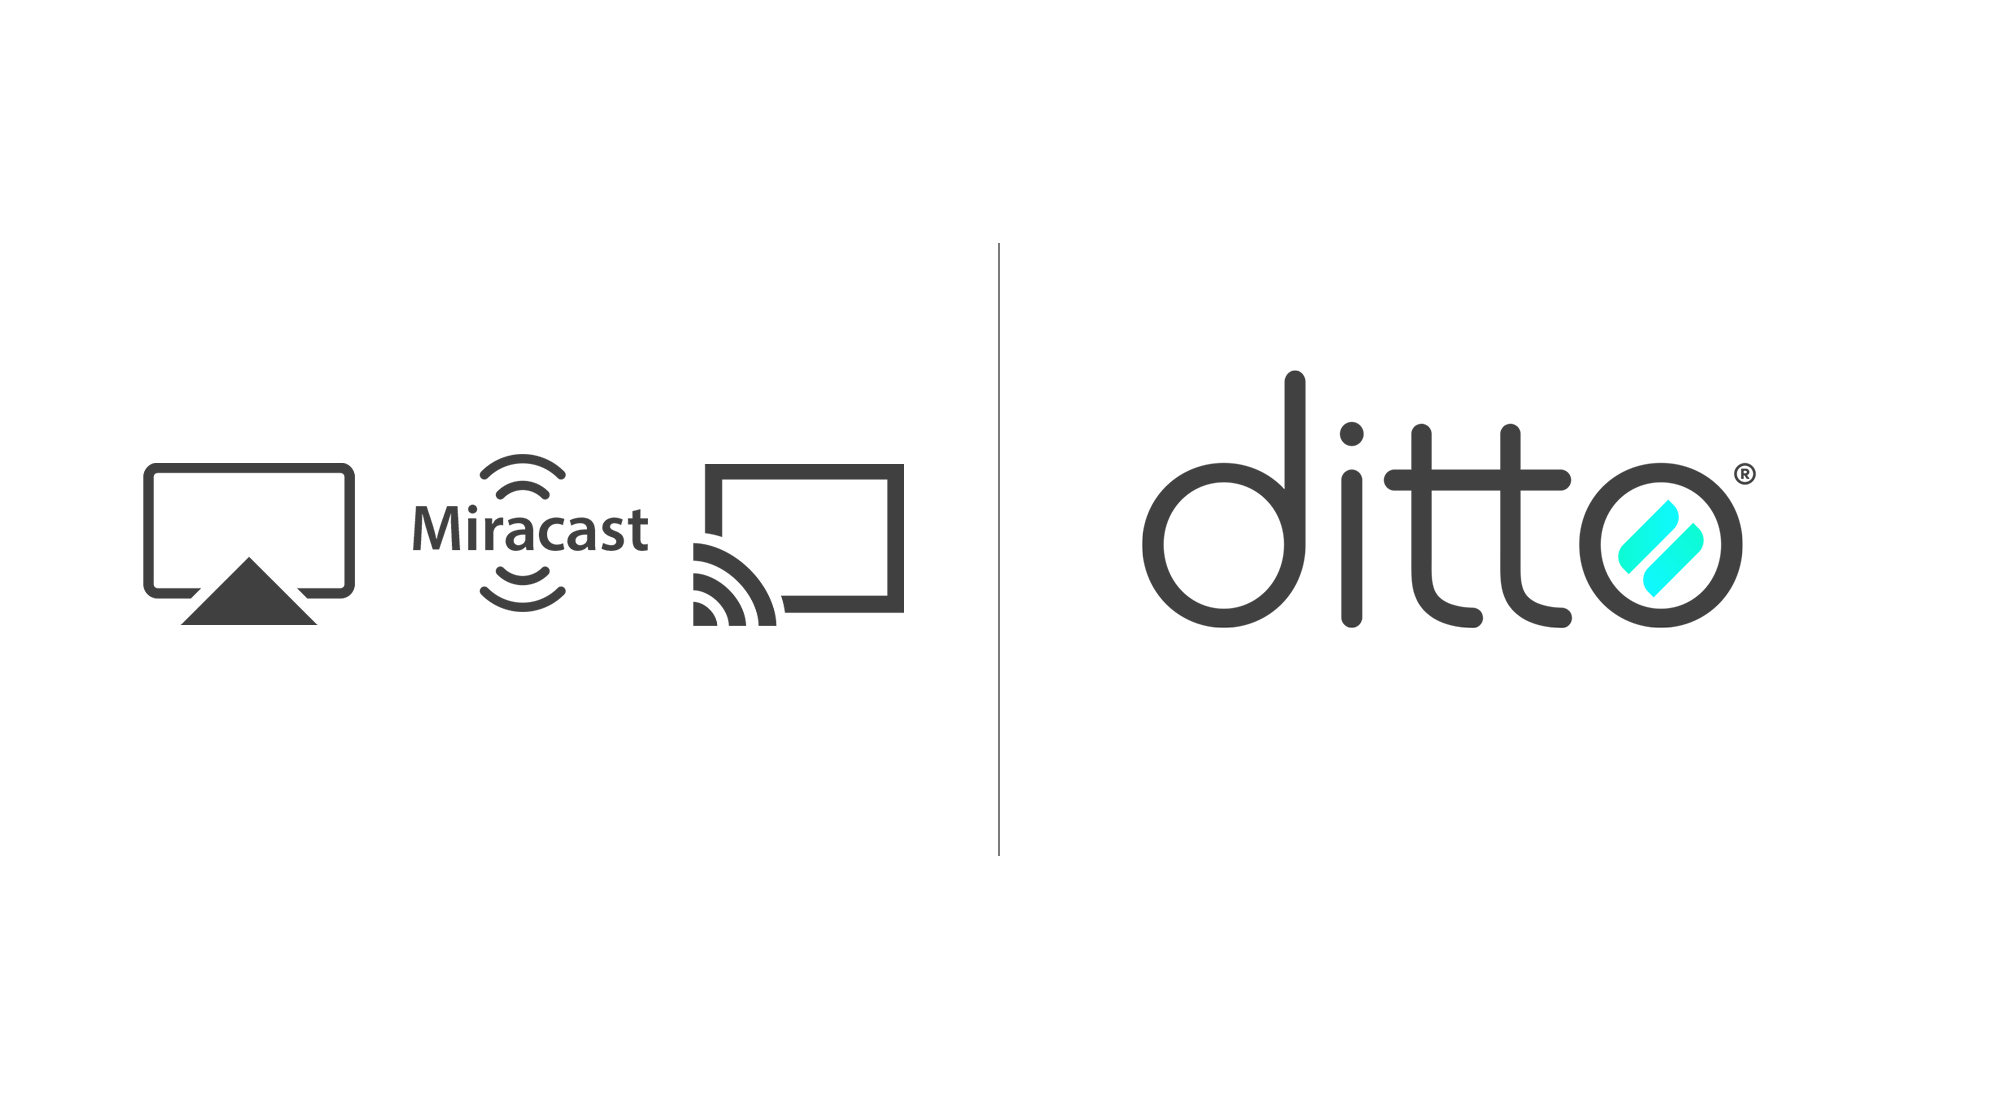 Ditto logo, Cast logo, AirPlay logo and Miracast logo